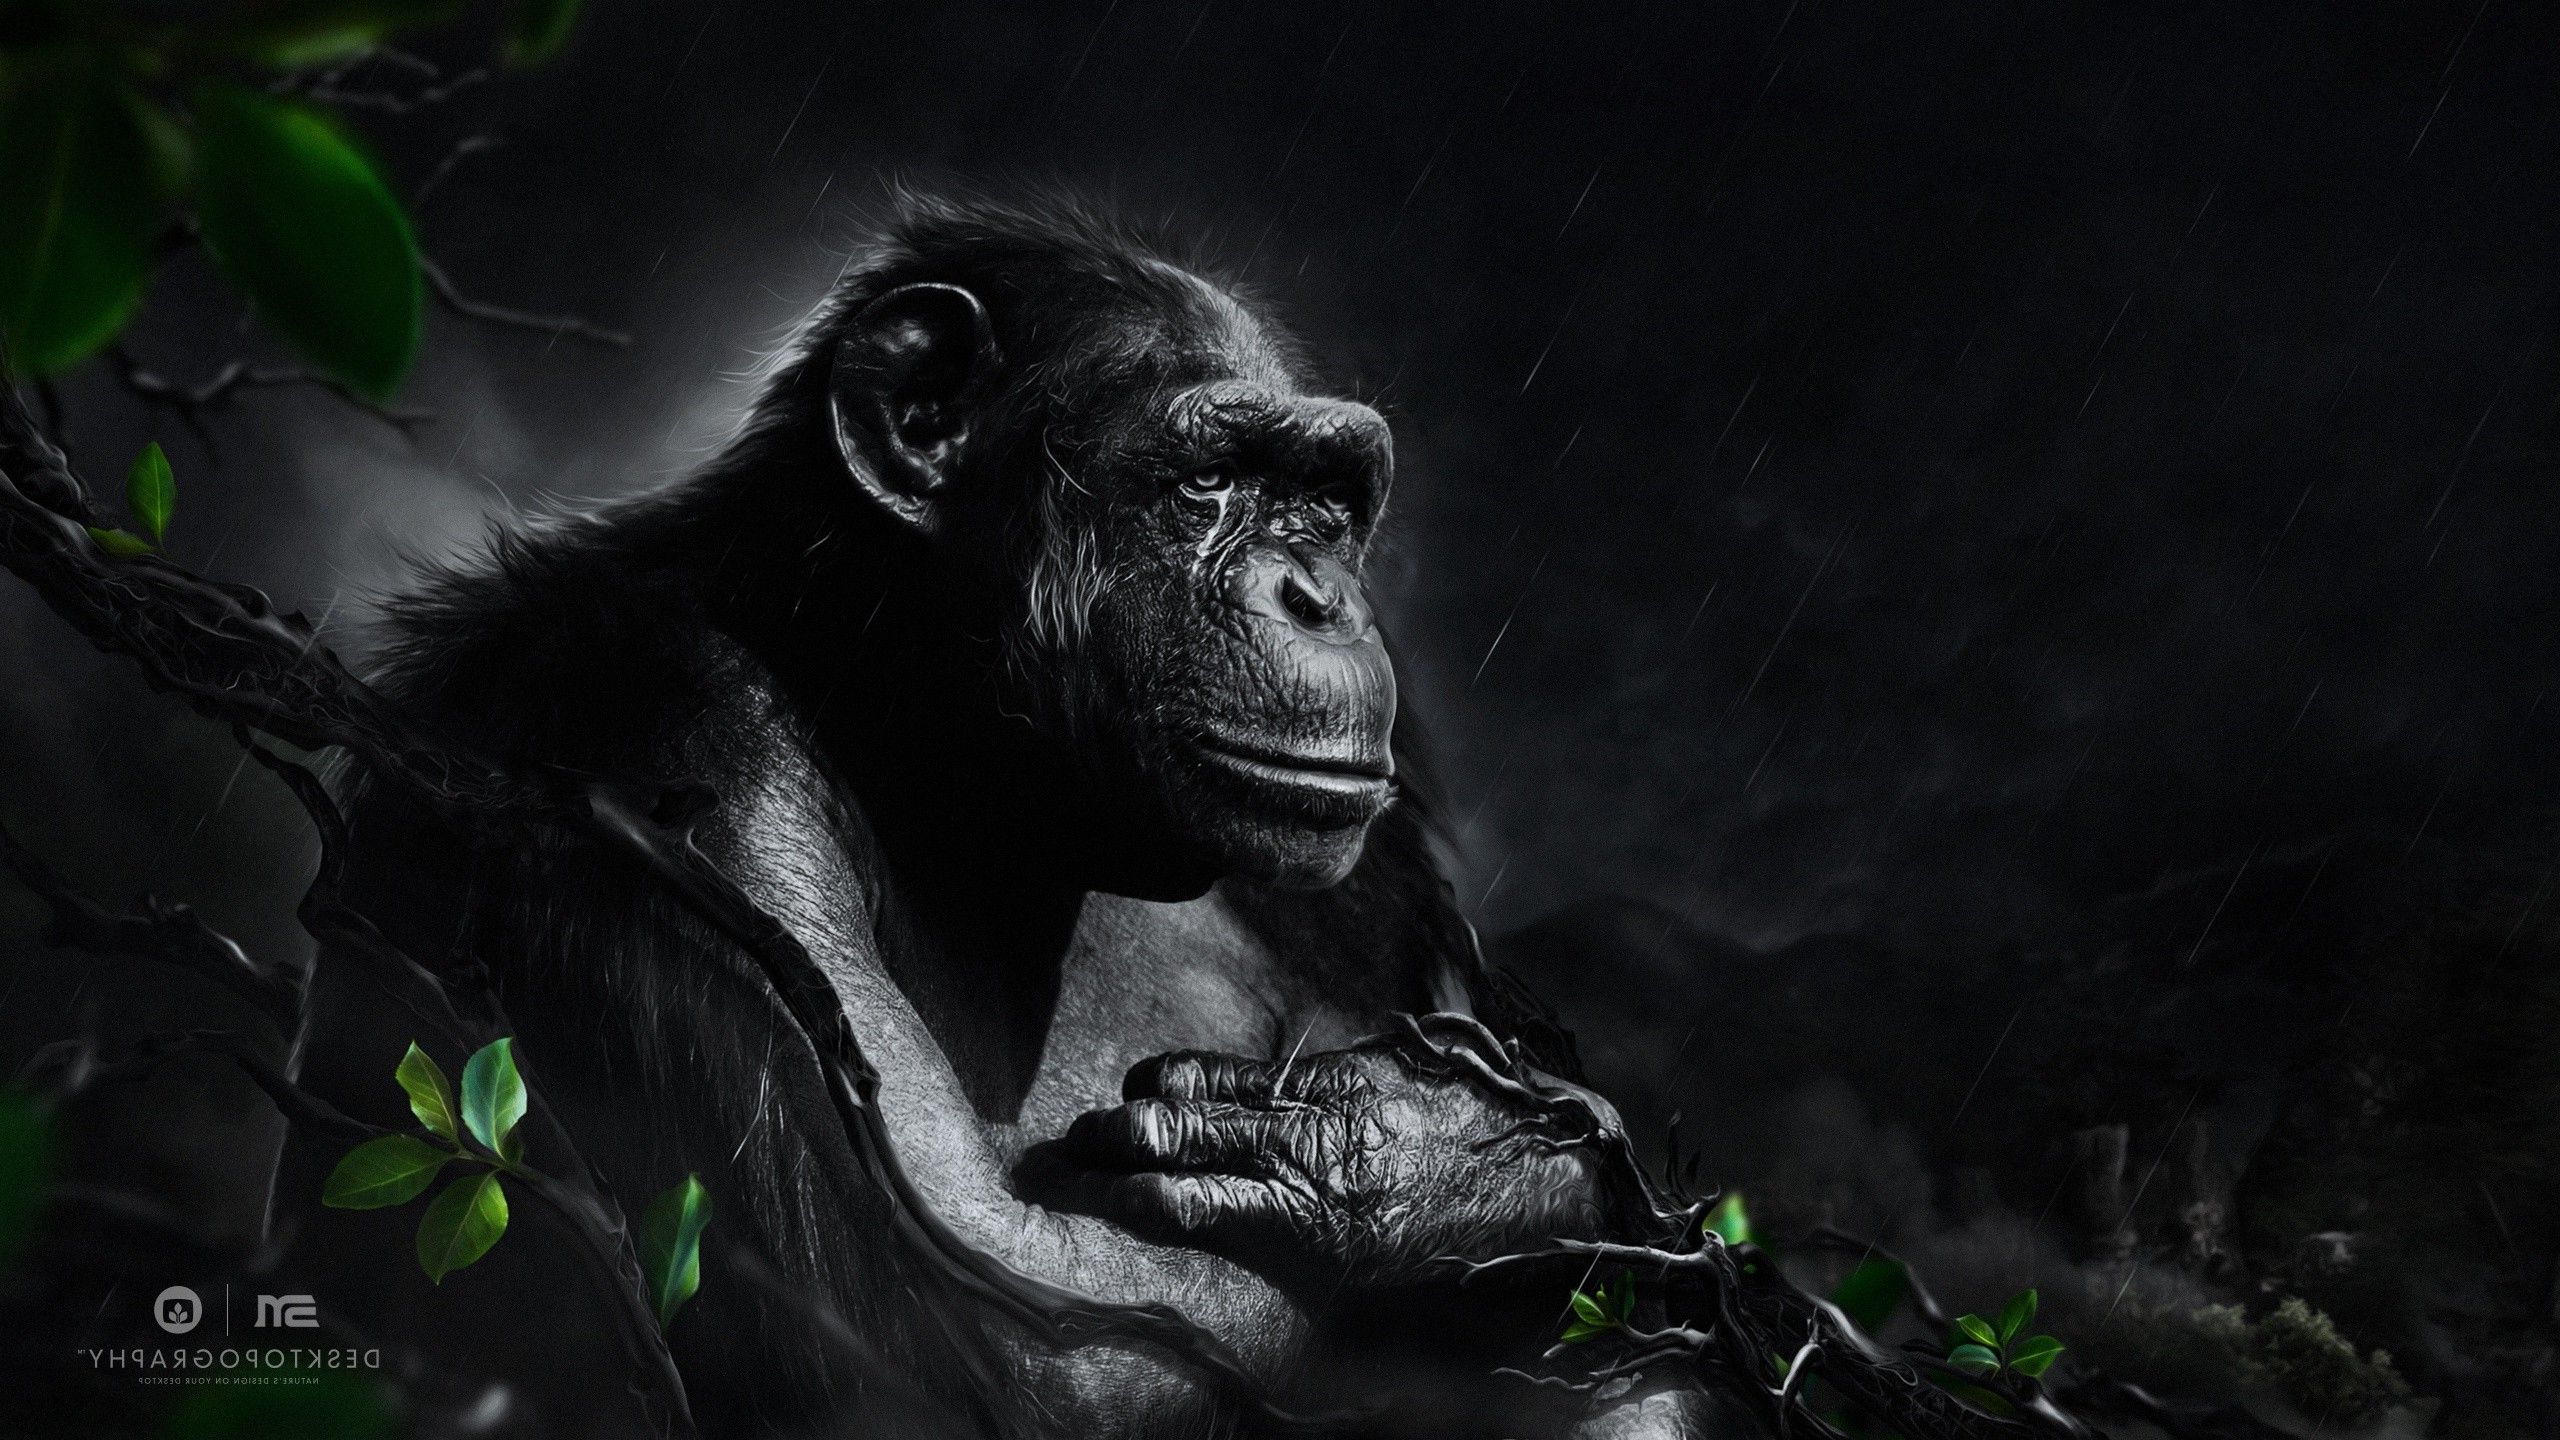 2560x1440 Desktopography Animals Rain Apes Digital Art Monkeys Wallpaper Hd Desktop And Mobile Background